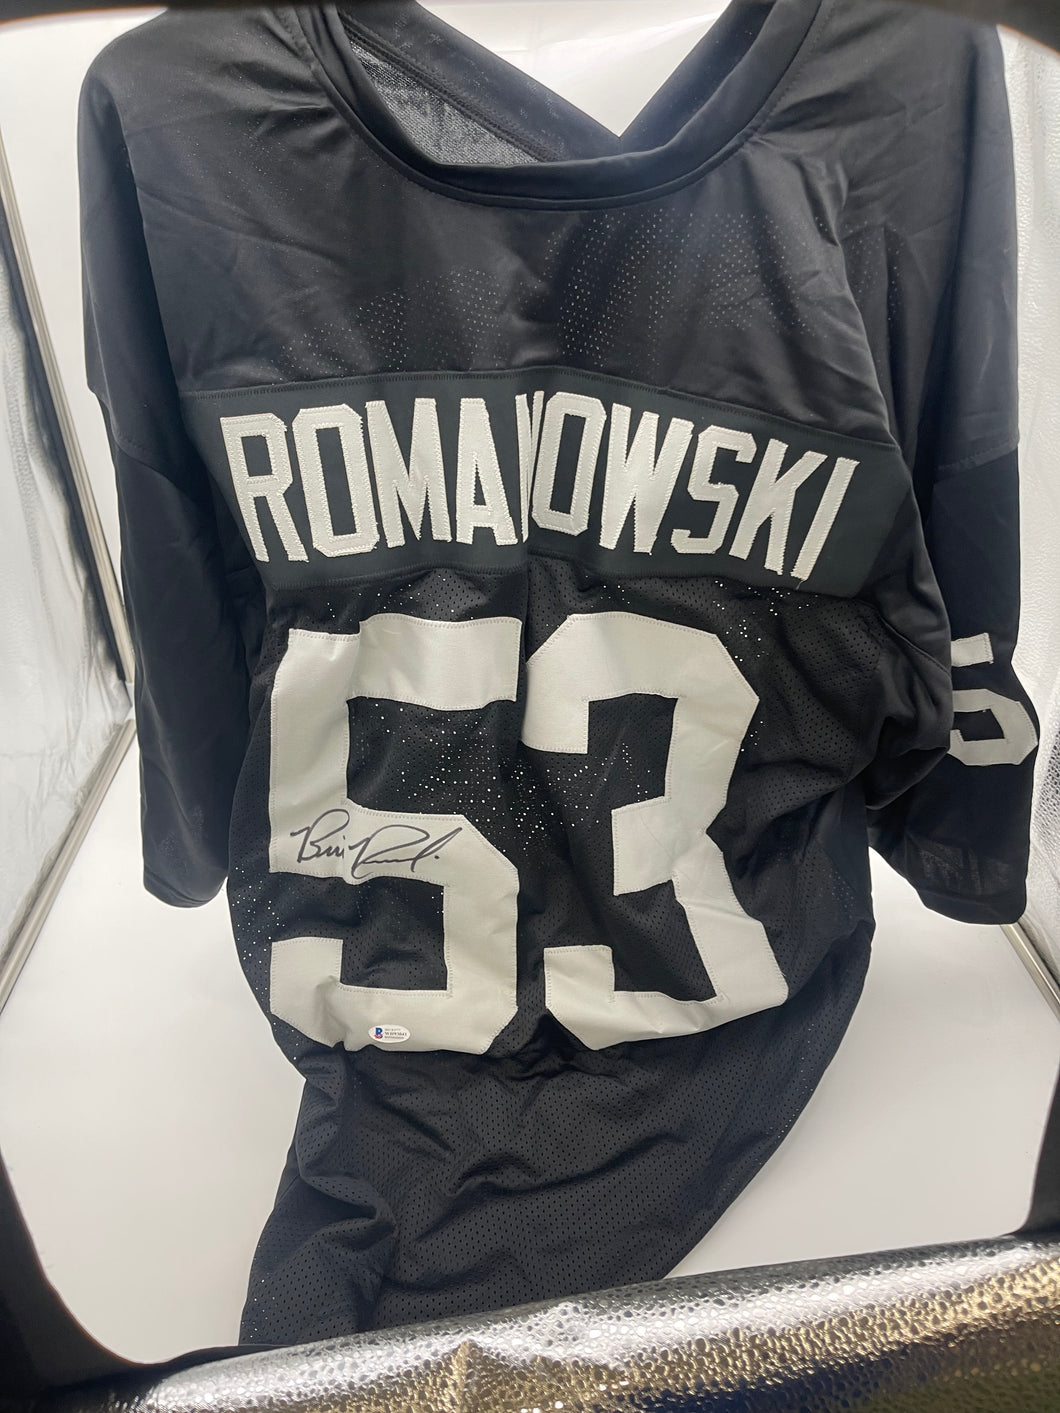 Bill Romanowski signed jersey